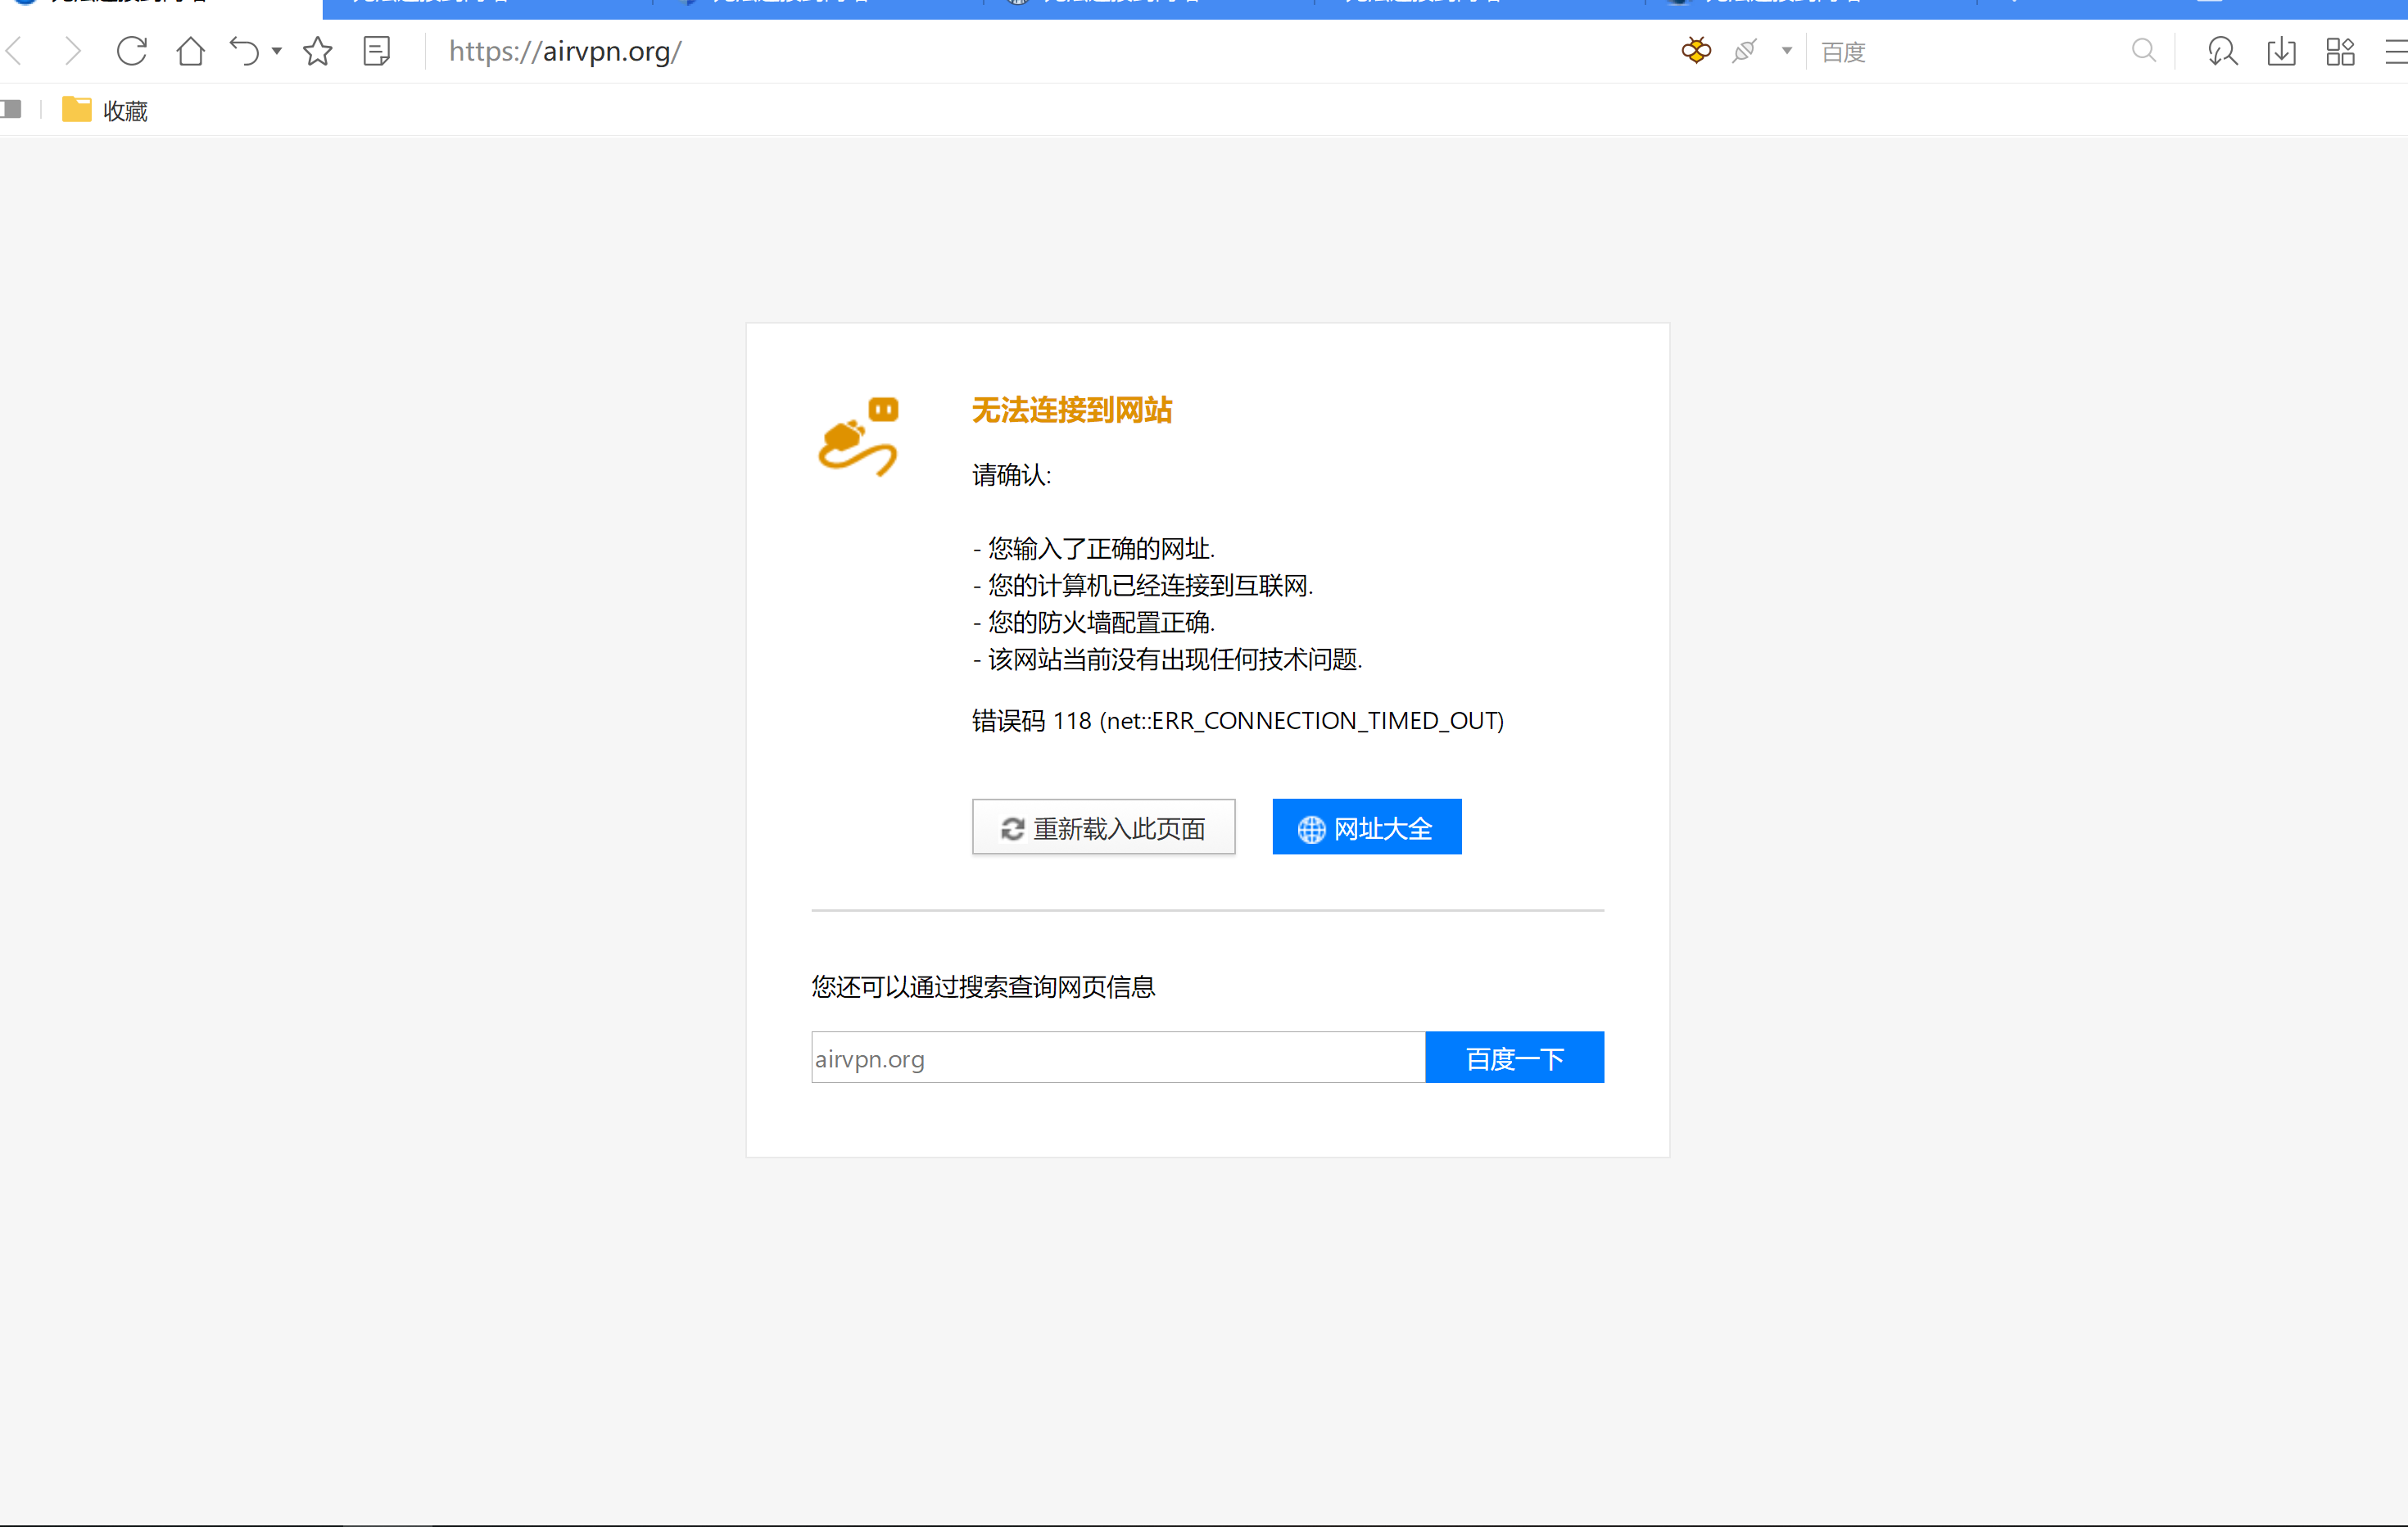 airvpn in china homepage fail